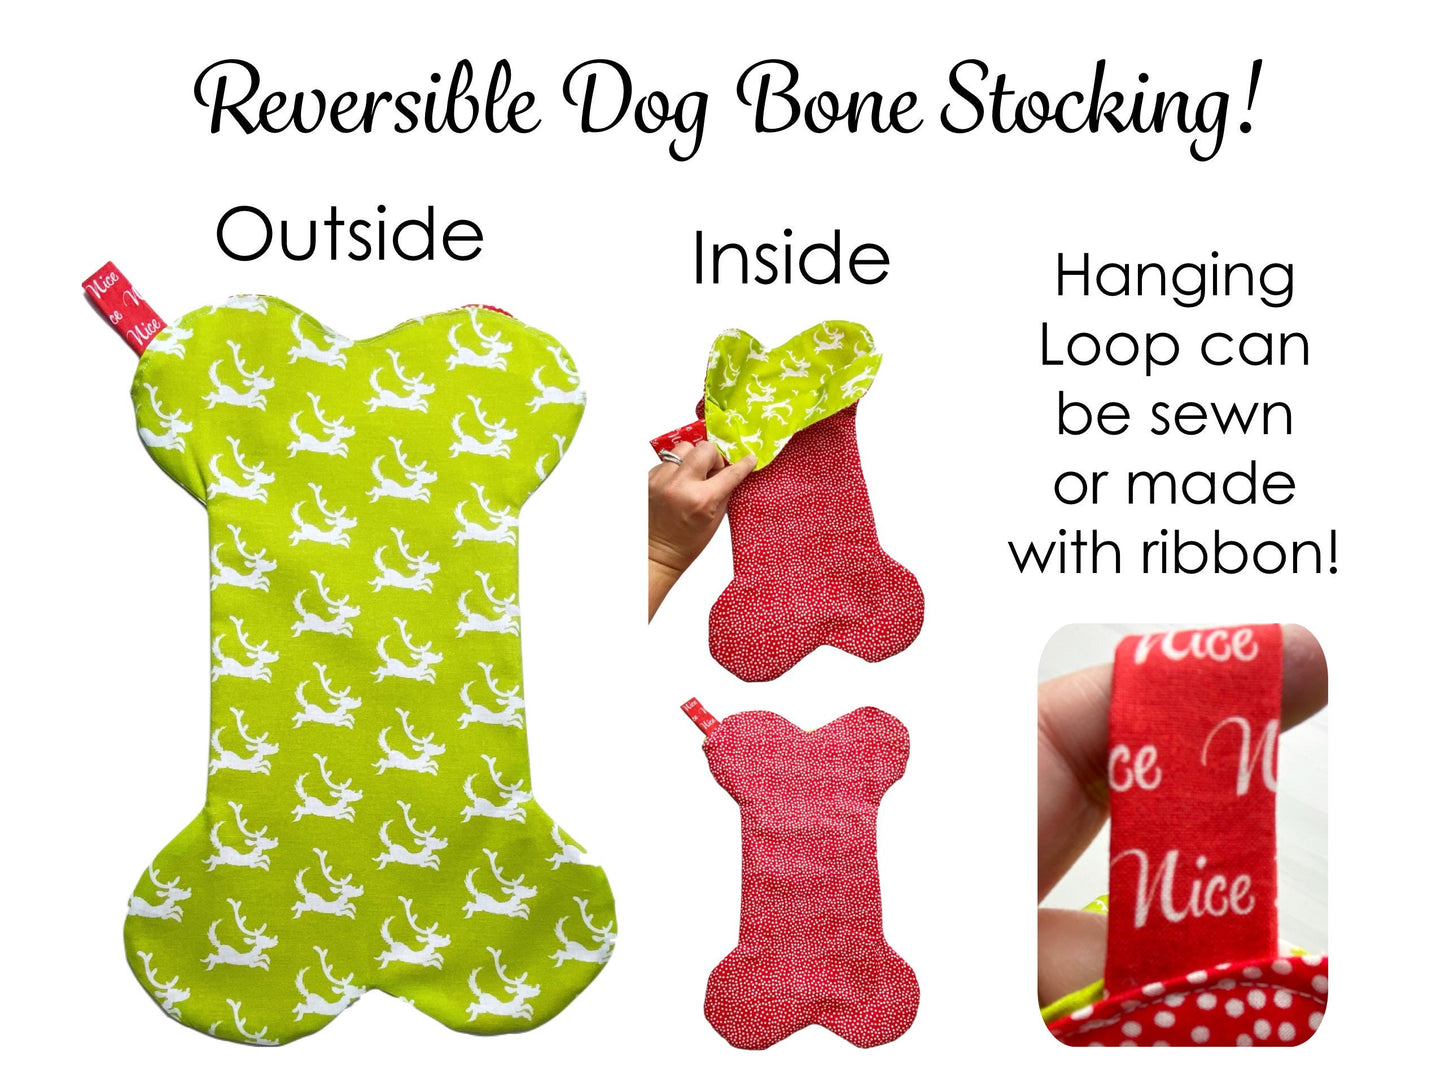 Pet christmas stocking, animal christmas stocking, dog bone christmas stocking sewing pattern, pdf sewing pattern, dogs pdf sewing pattern, learn how to sew a dog stocking, learn how to sew a dog bone stocking